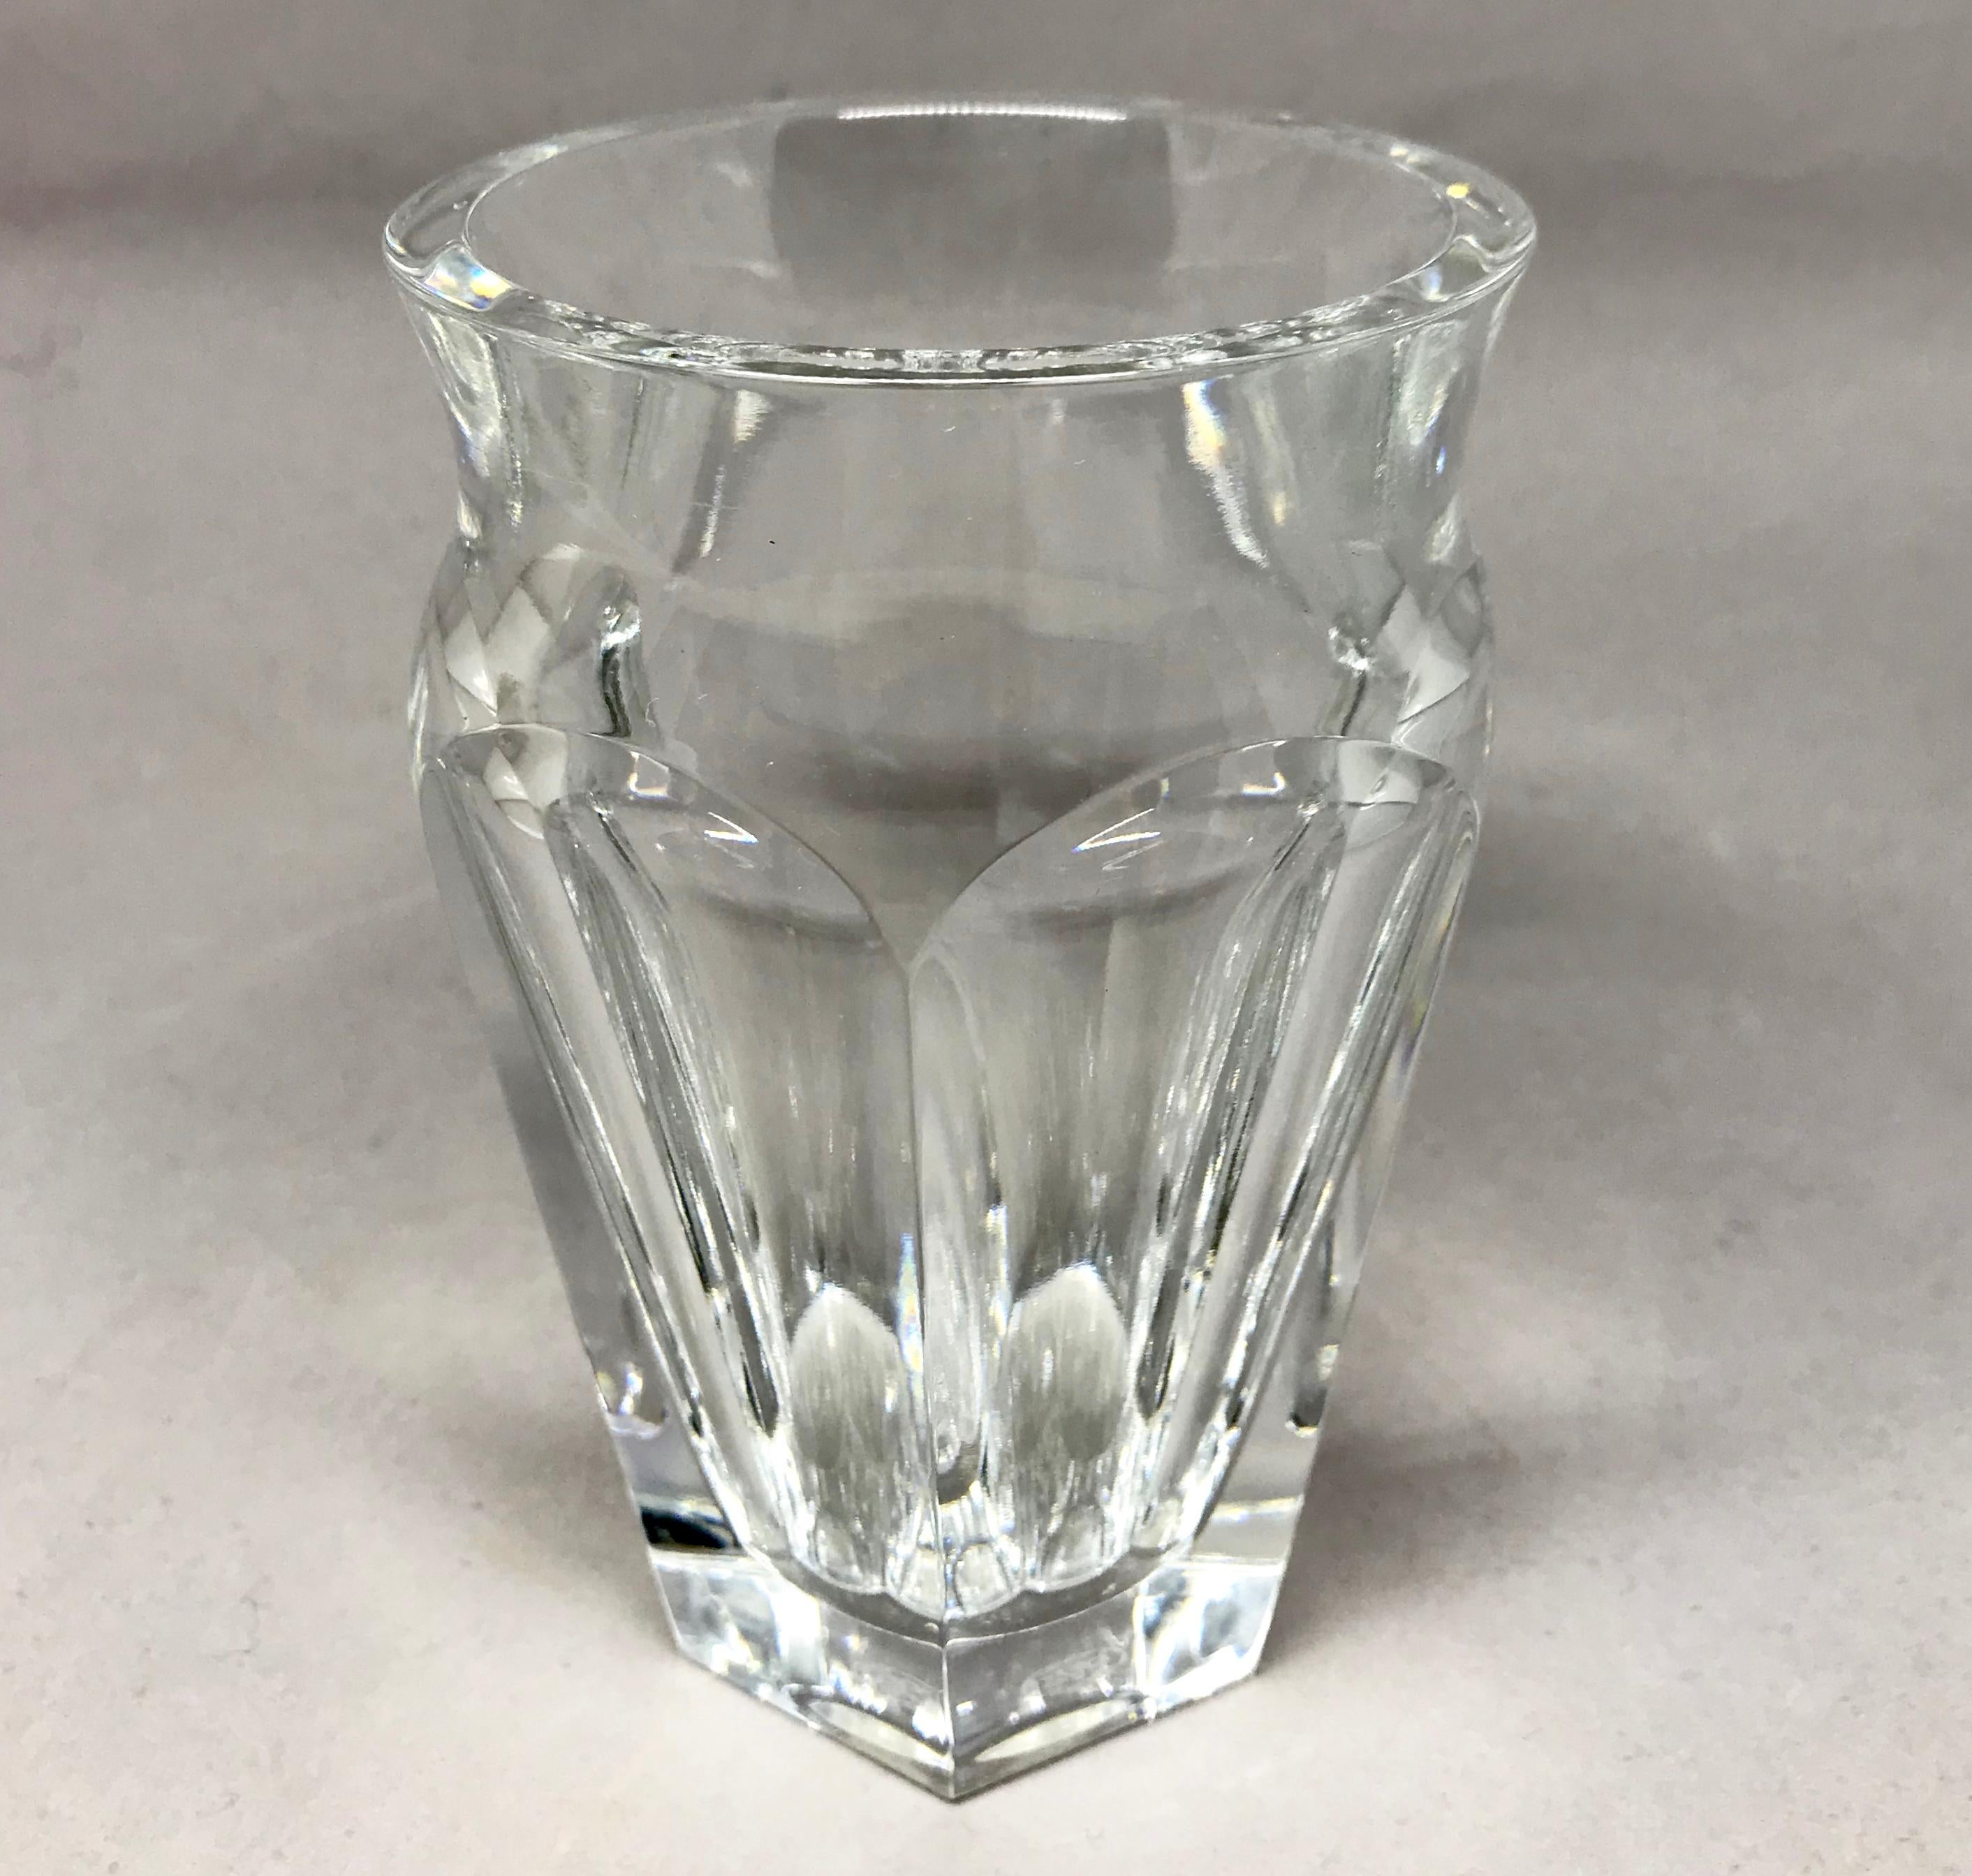 Midcentury Baccarat crystal vase. Vintage small clean faceted crystal flower vase. France, circa 1950
Dimensions: 5